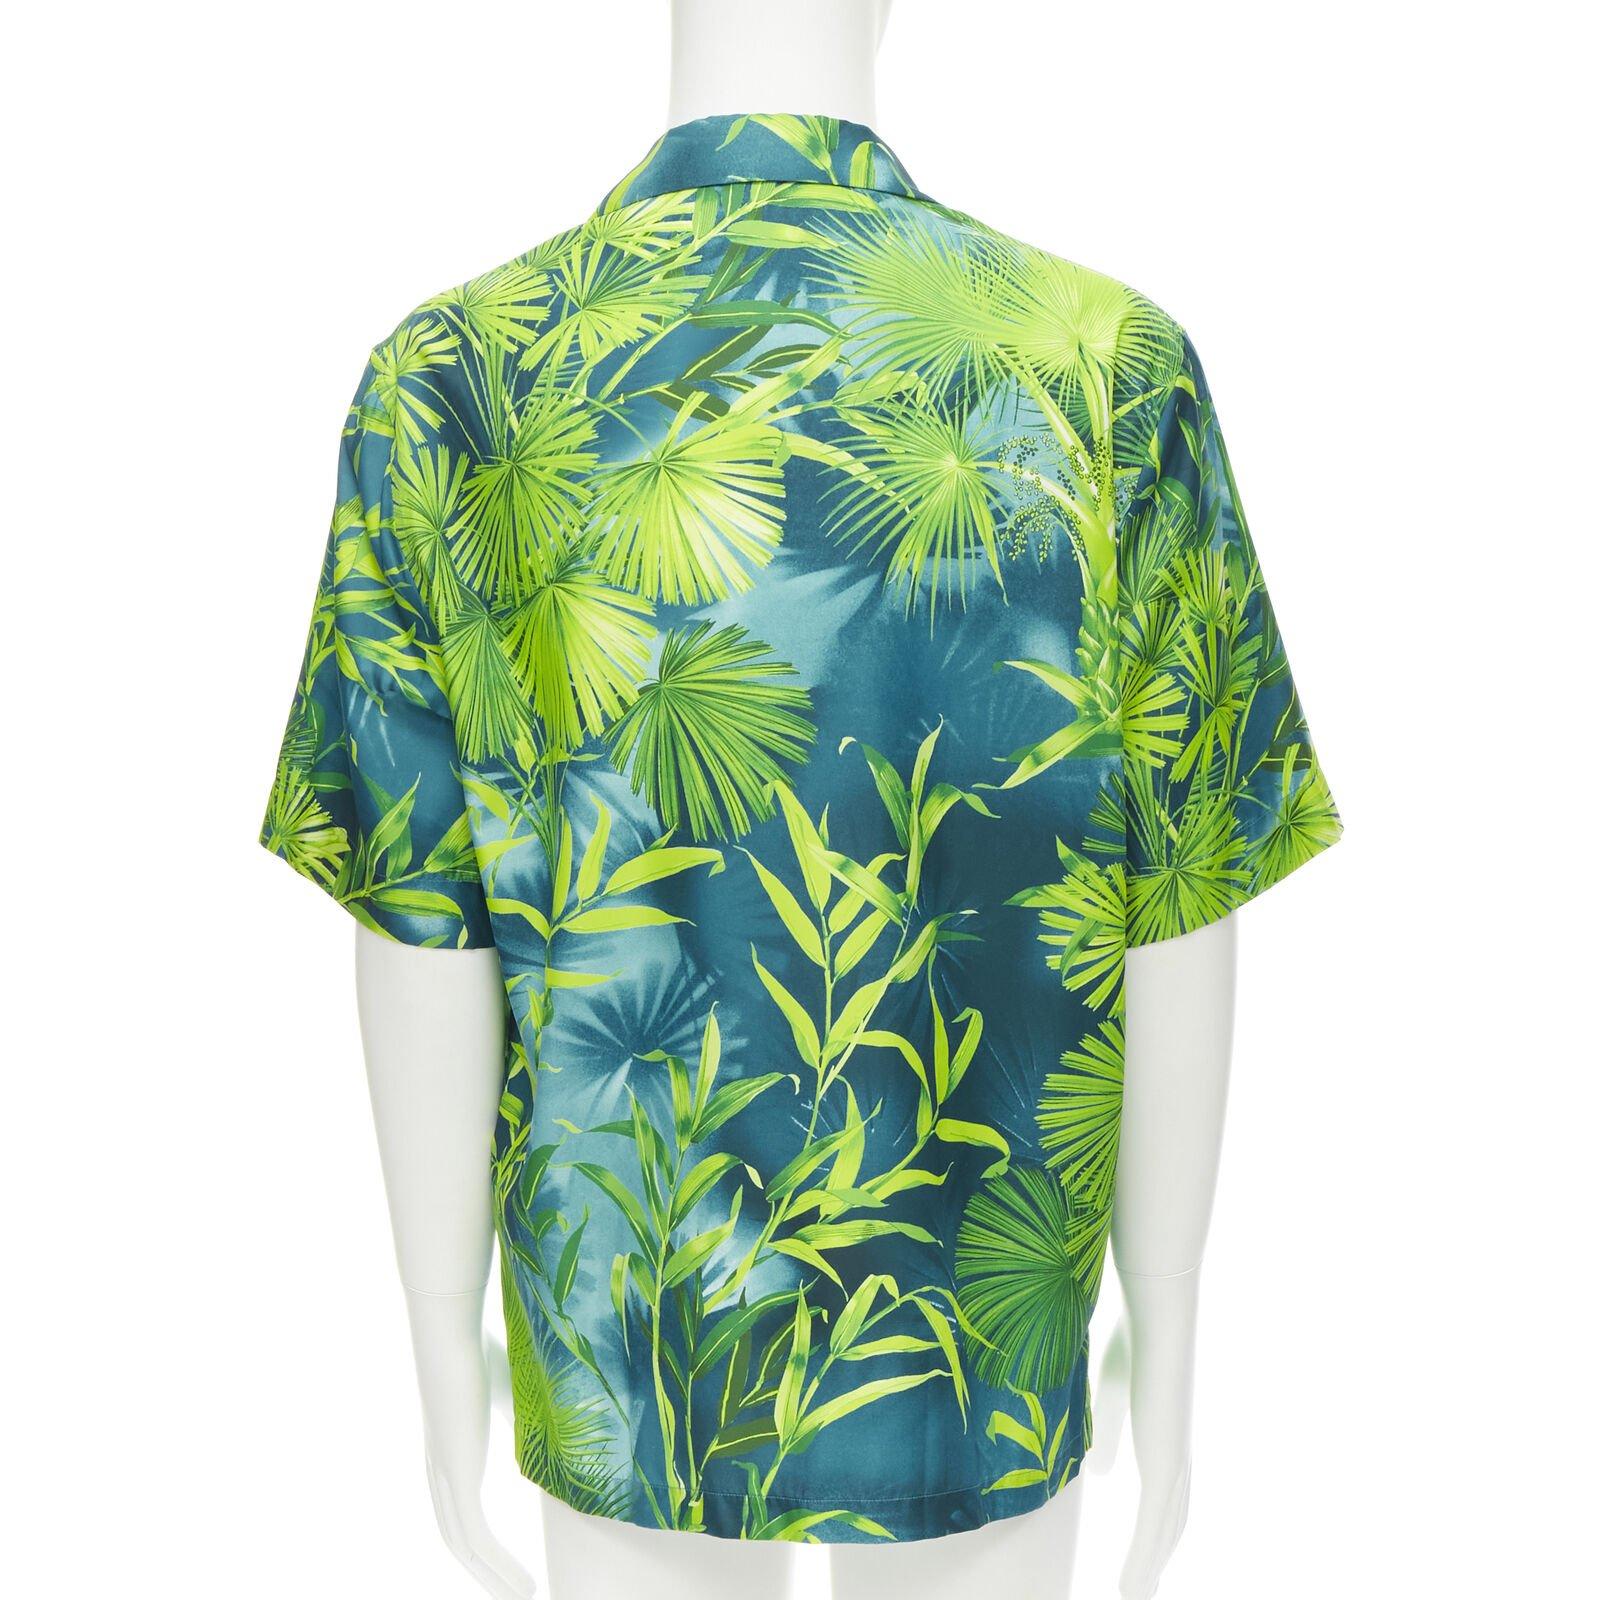 VERSACE 2020 Iconic JLo Jungle print green tropical print shirt EU41 XL 1